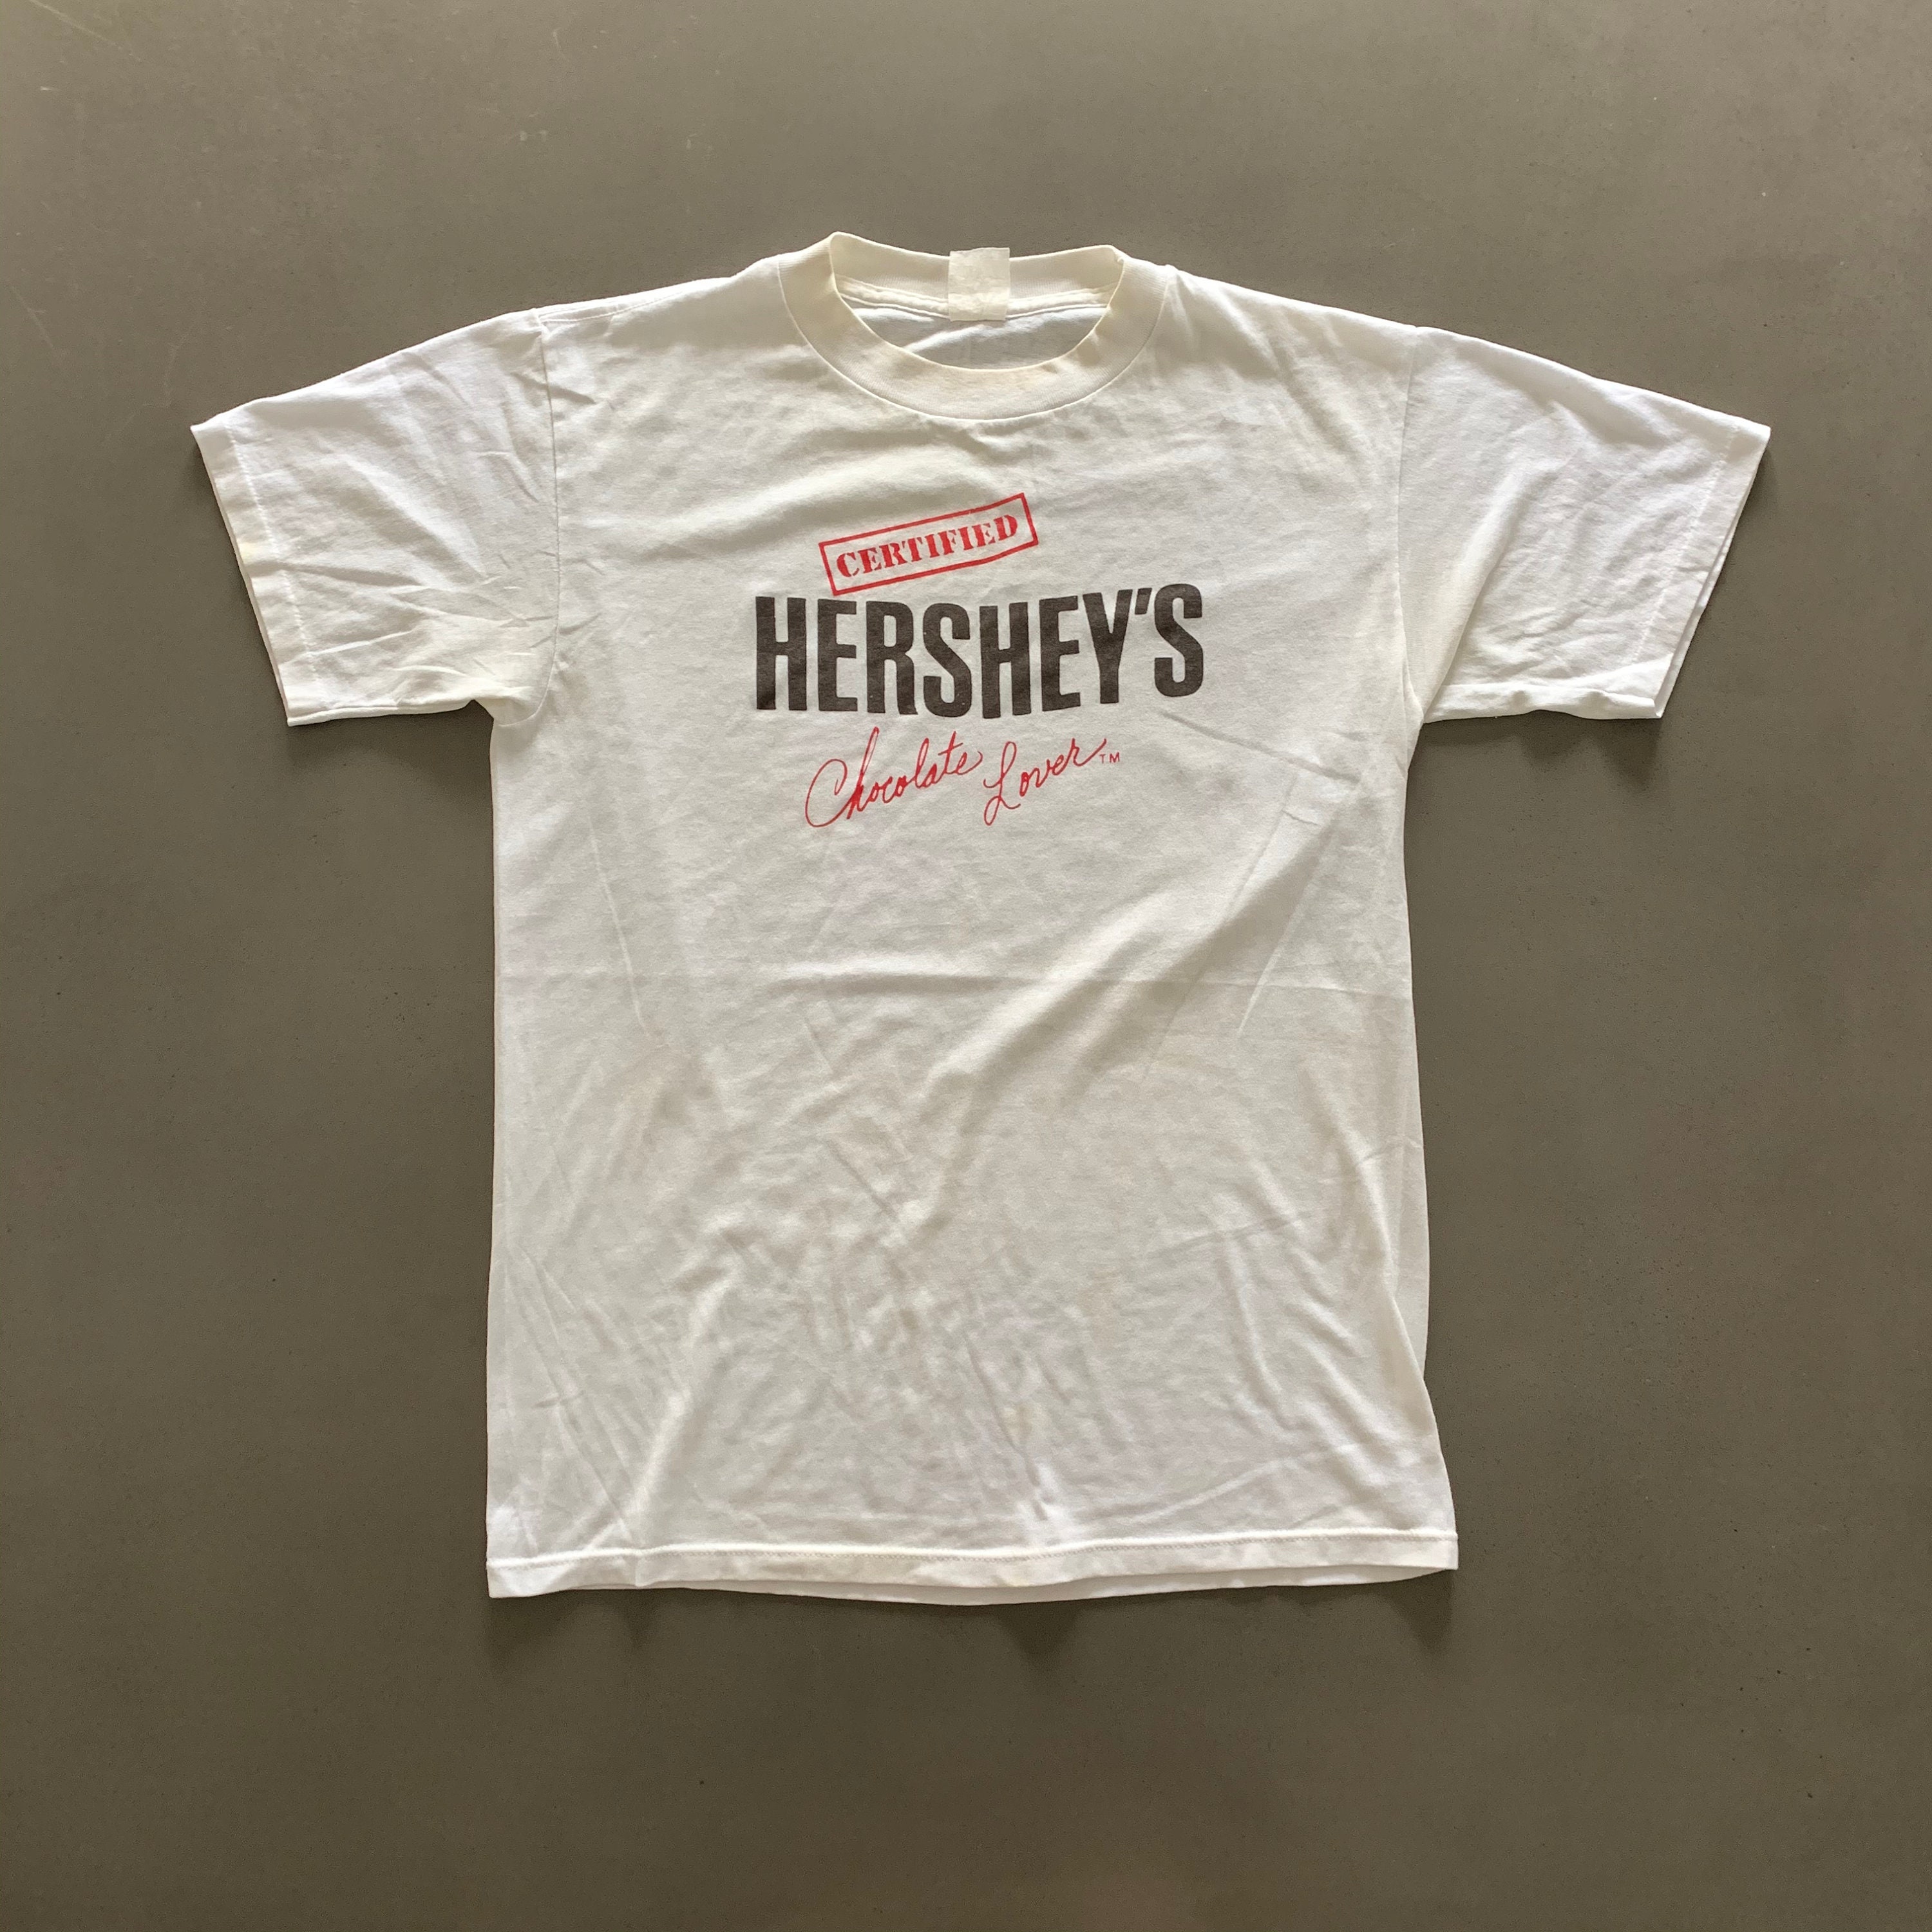 Vintage 1980s Hershey's T-shirt size Large | Etsy